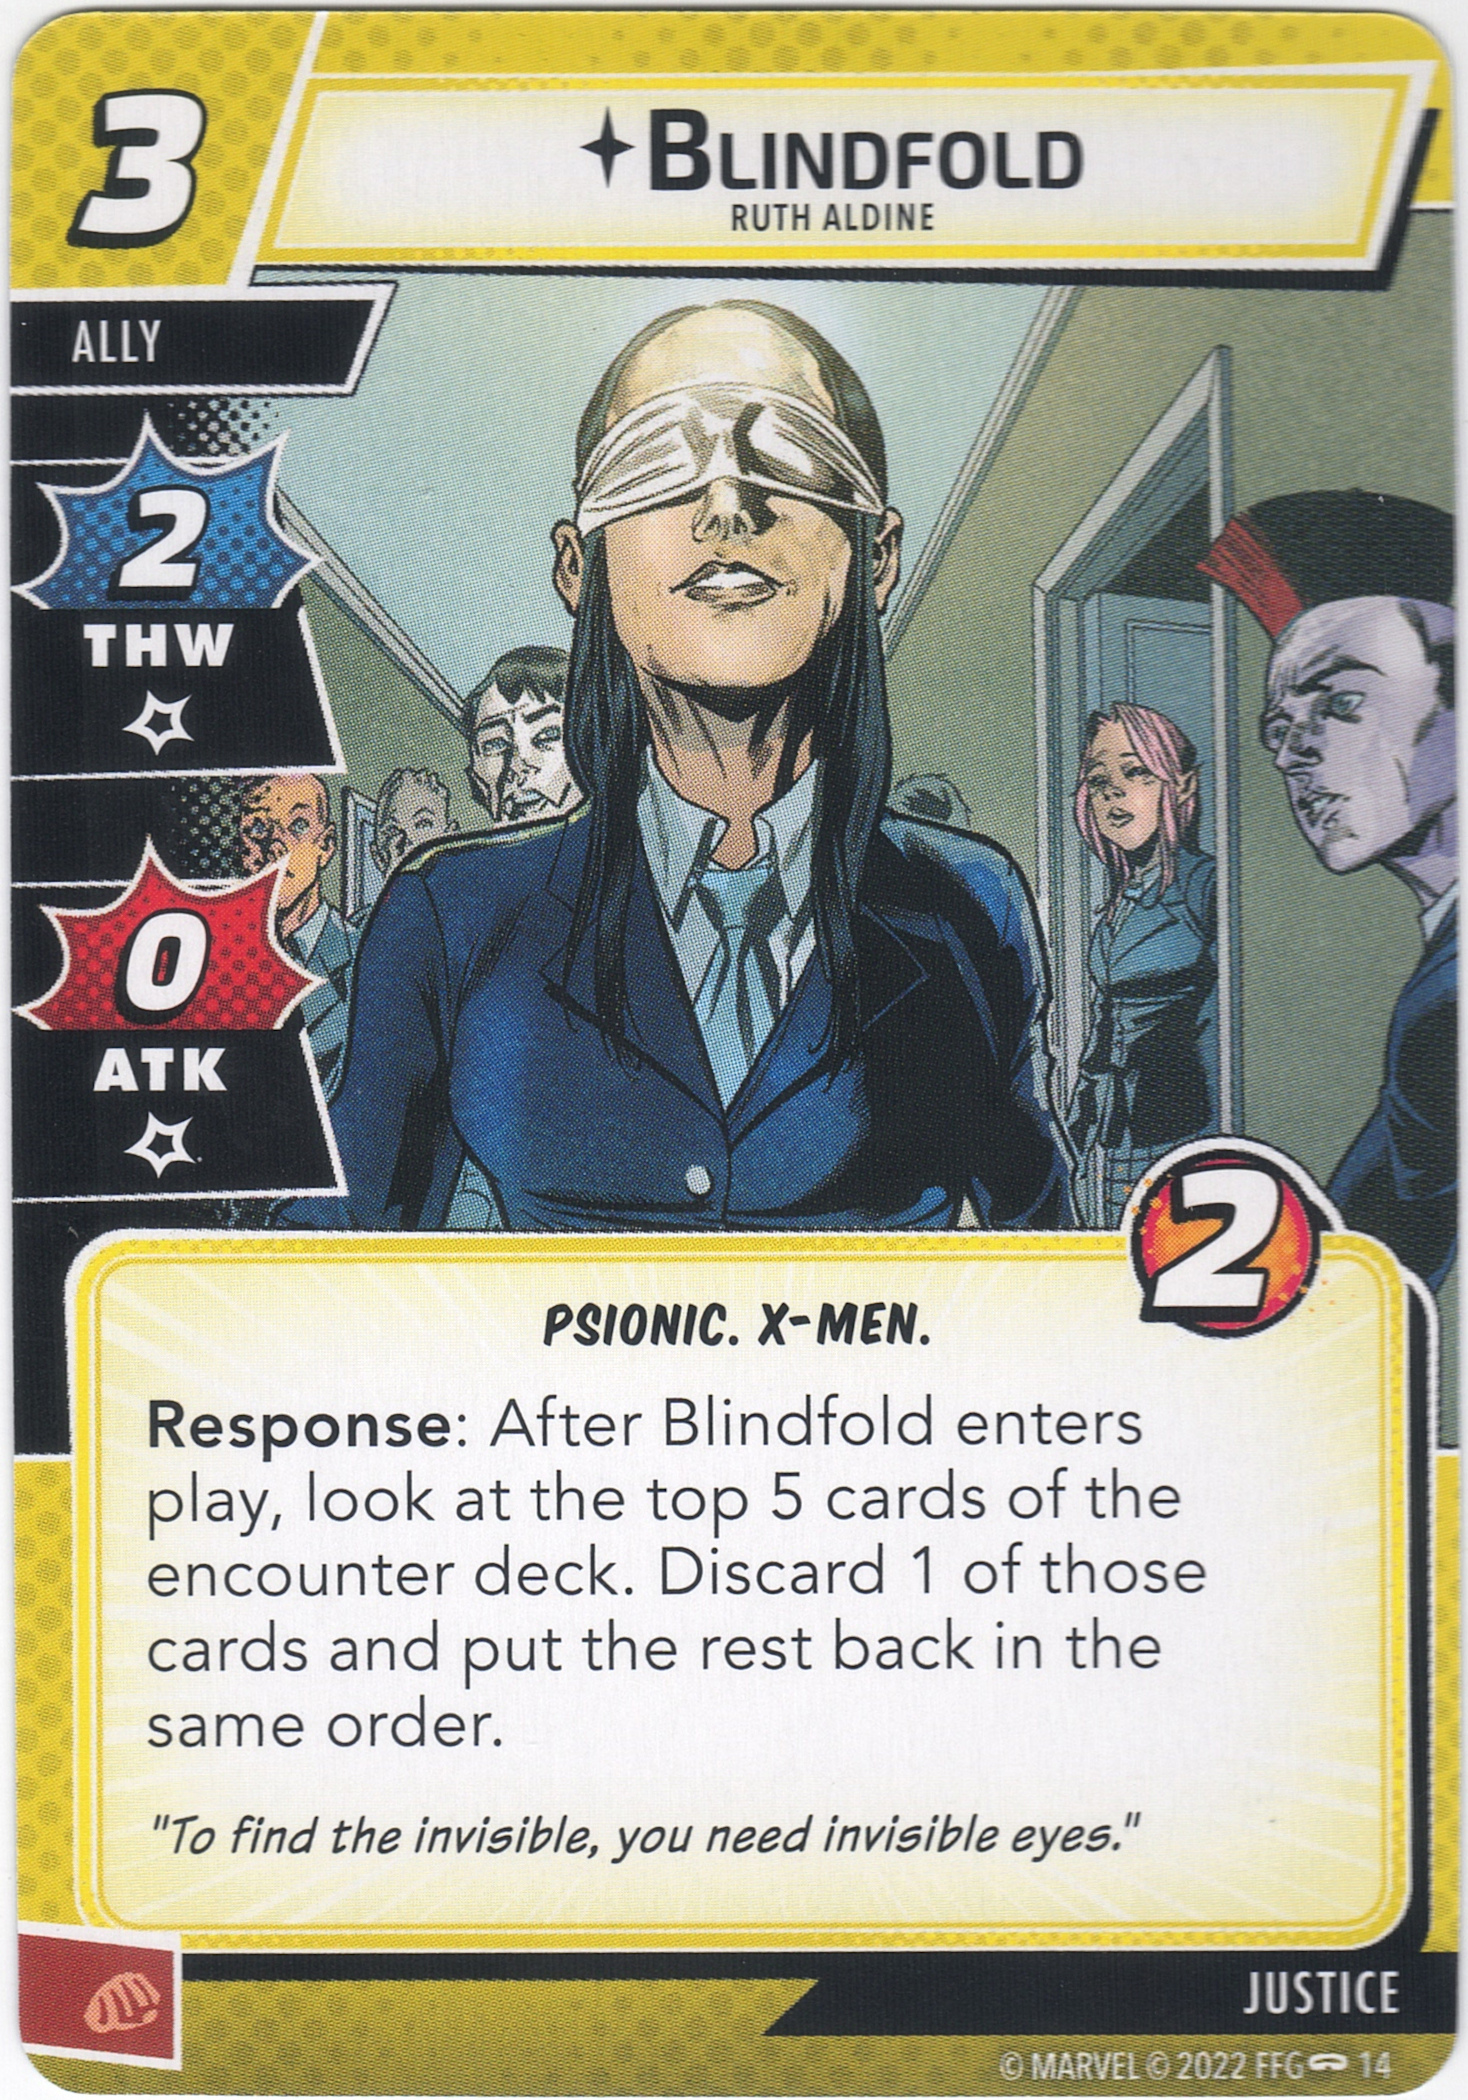 Blindfold (Ruth Aldine)